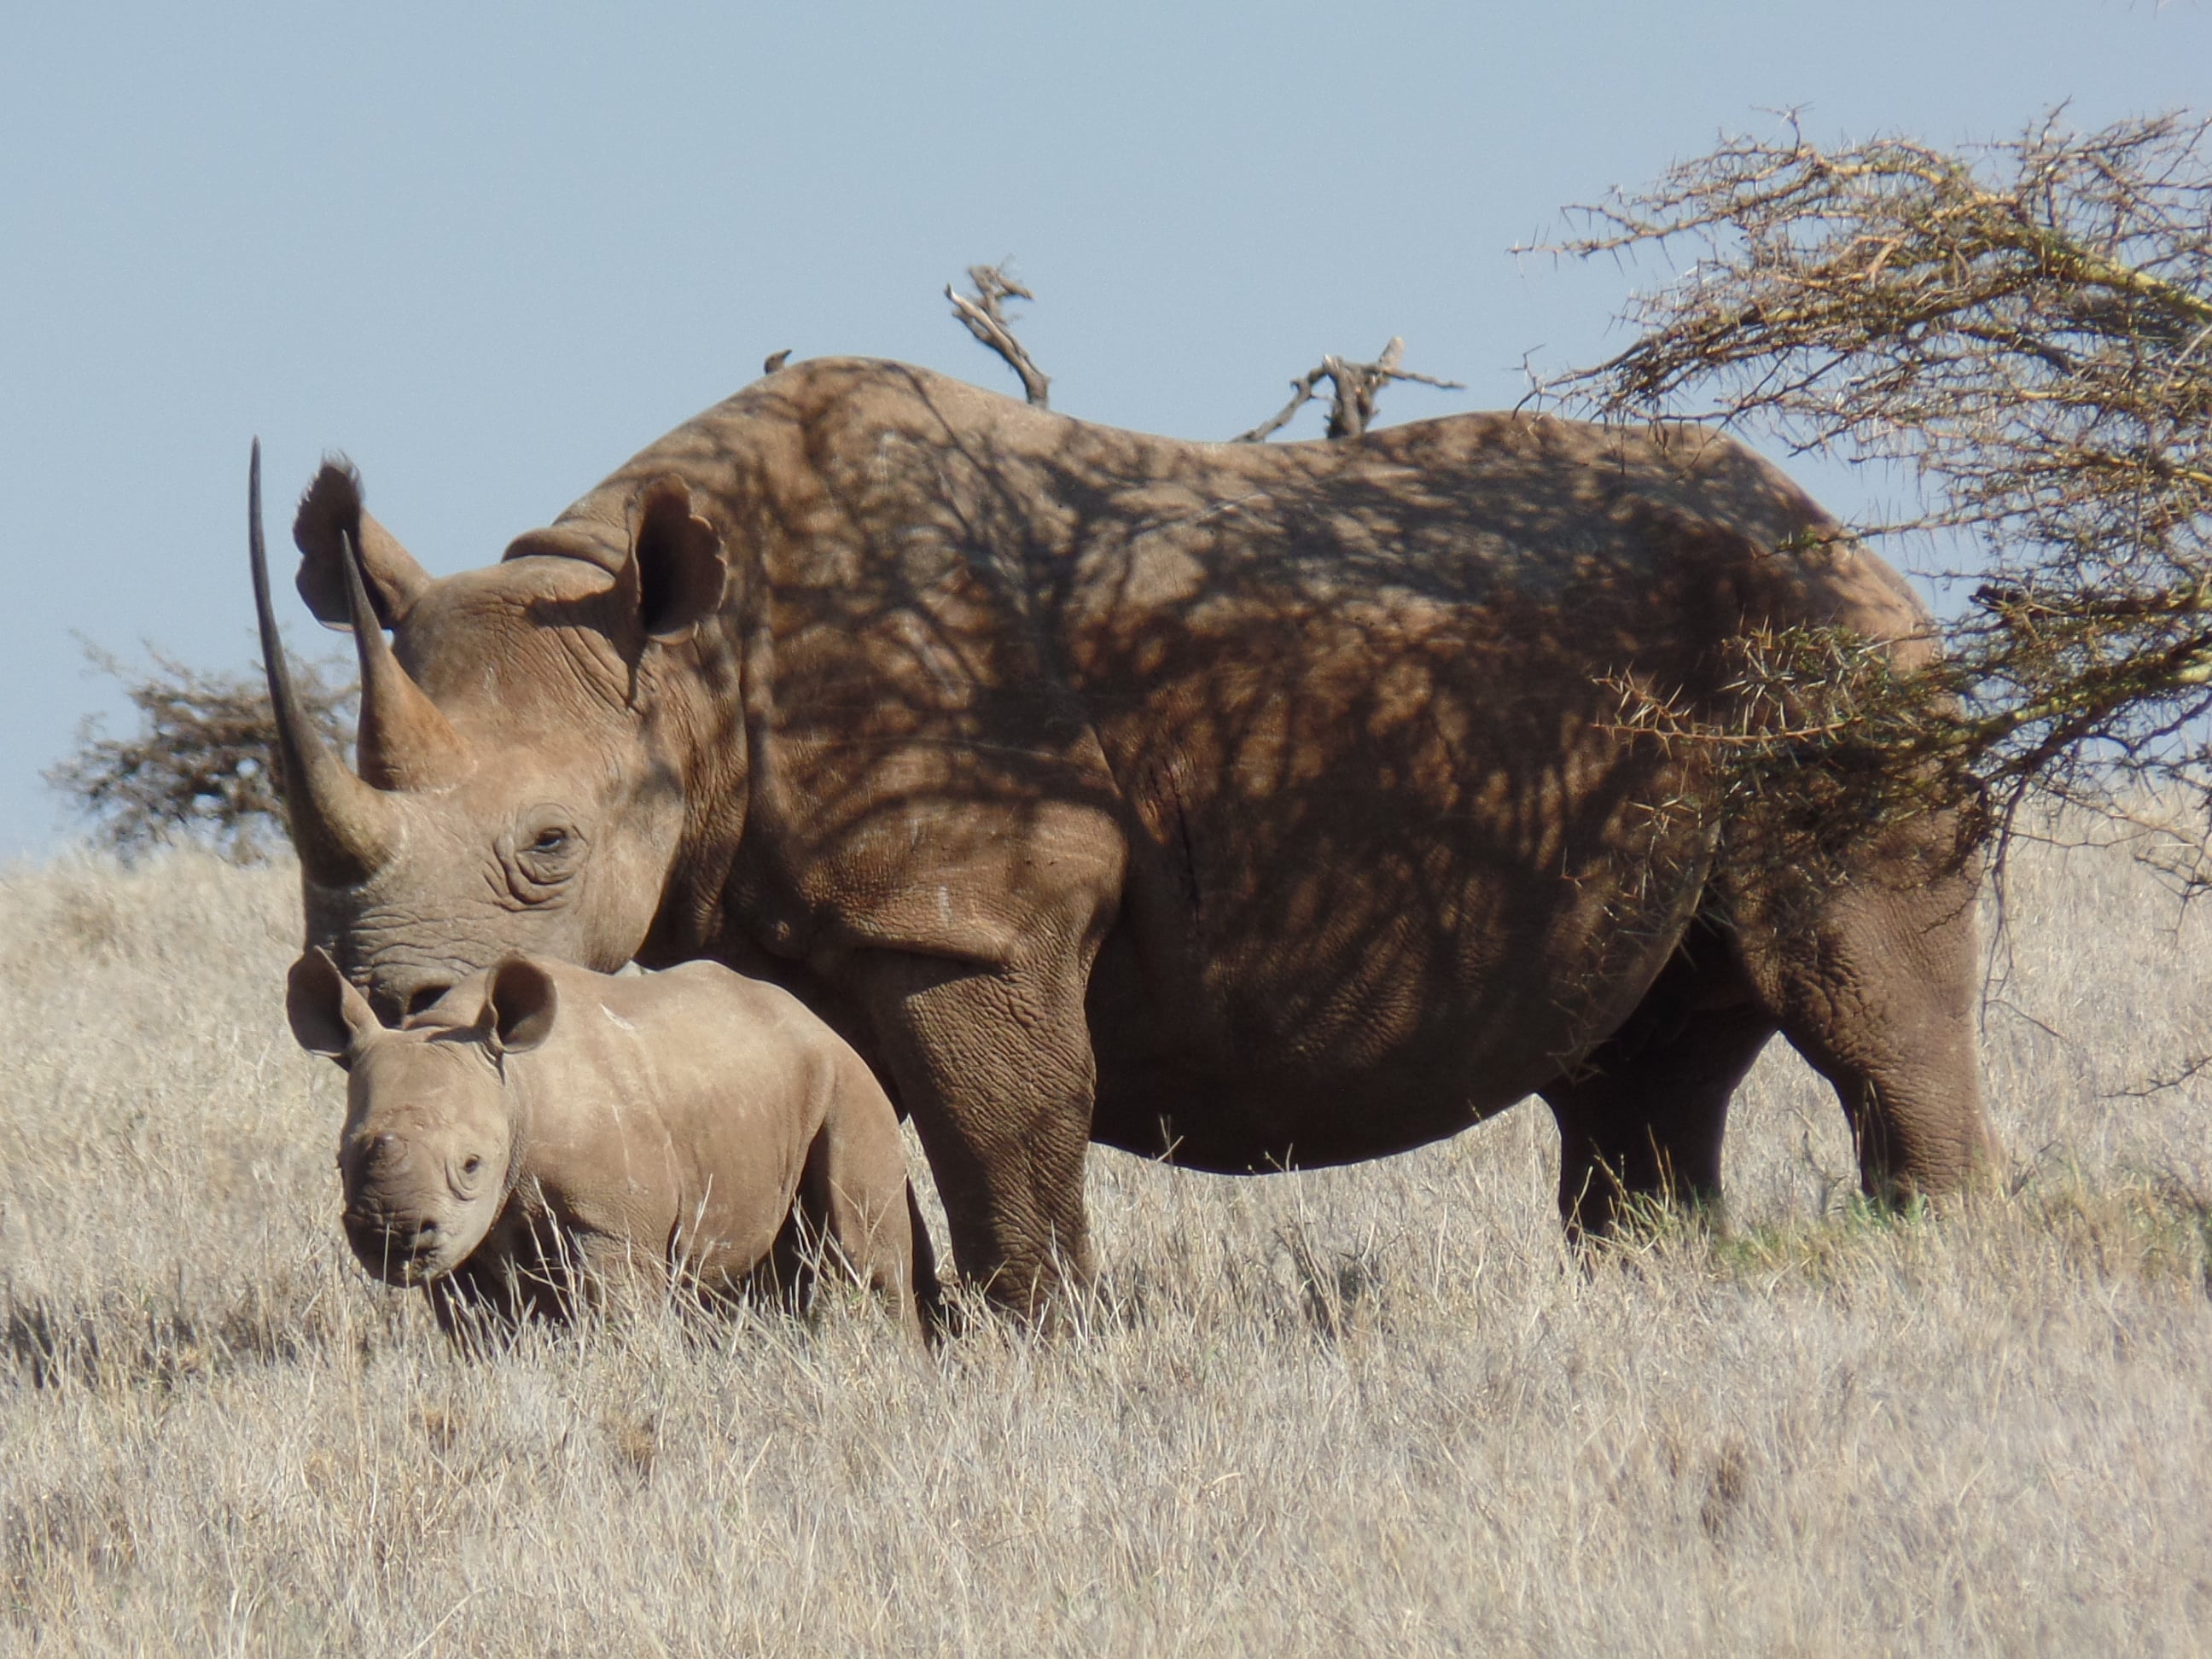 Black rhino with a calf